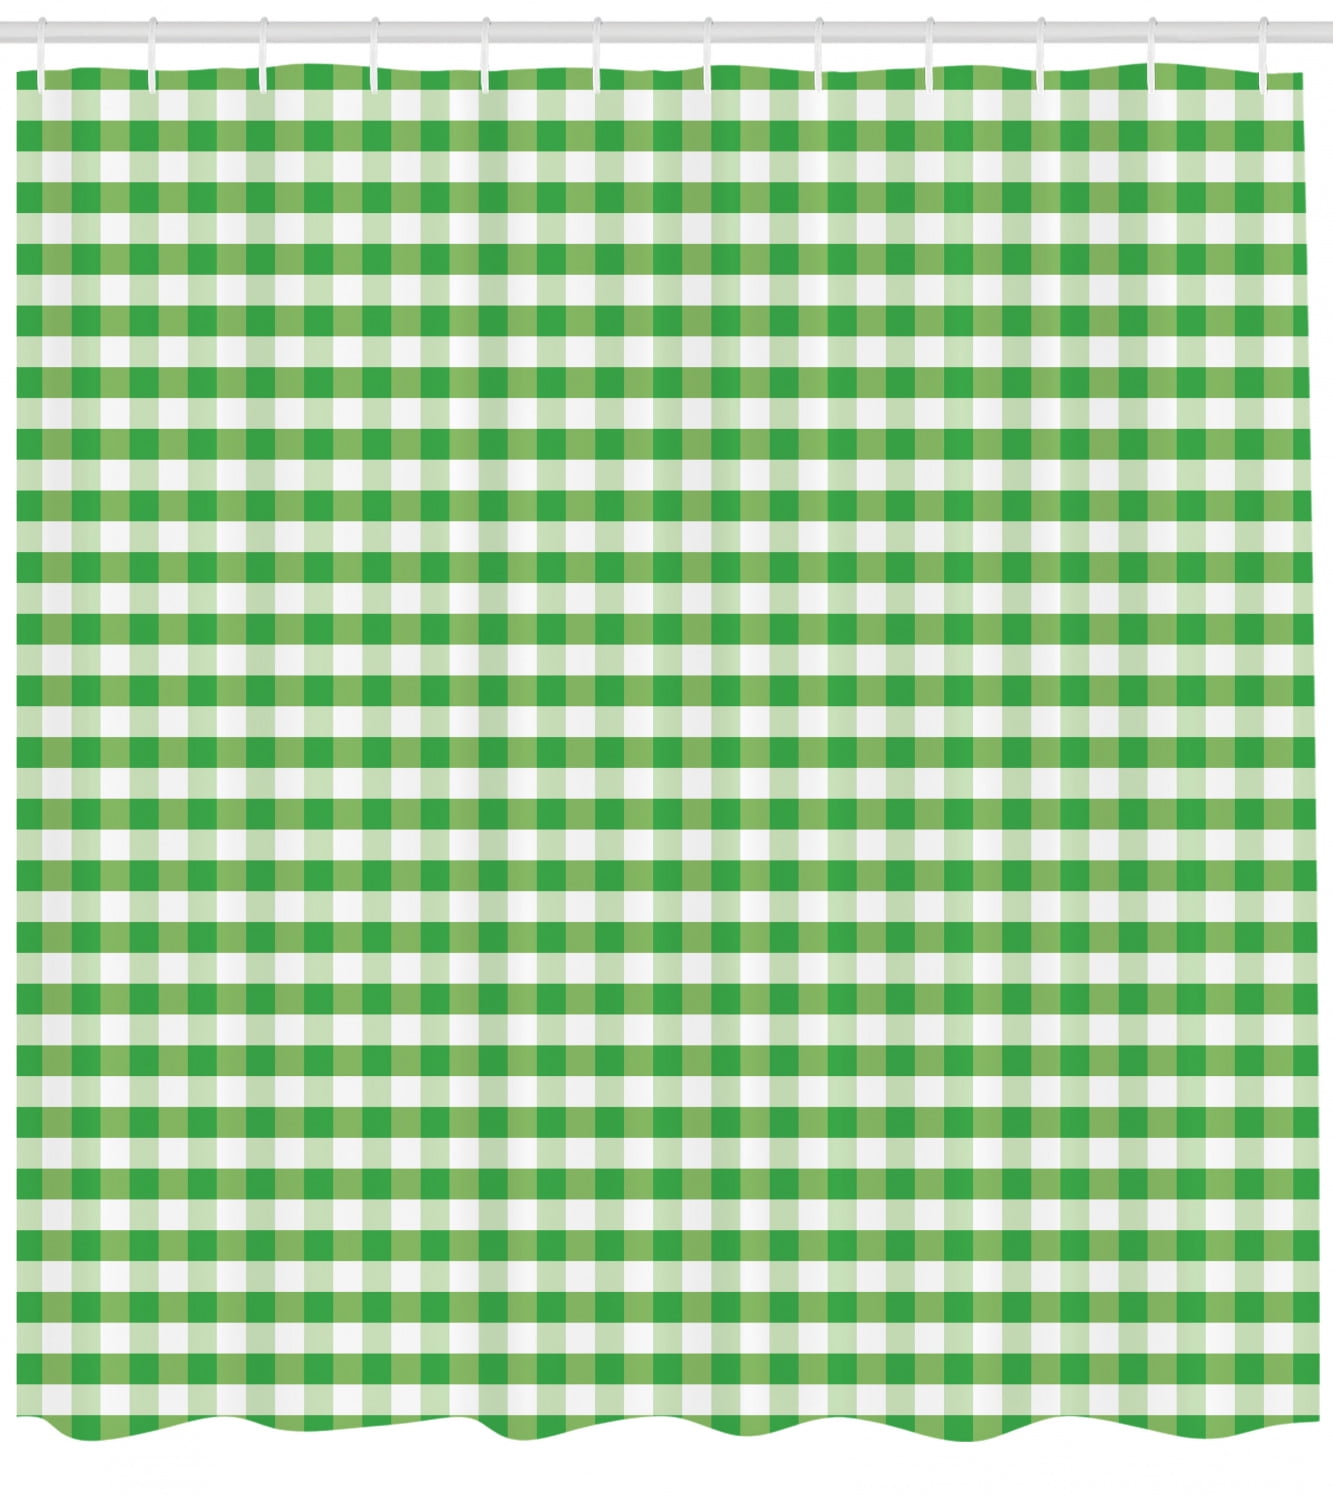 checkered picnic rug